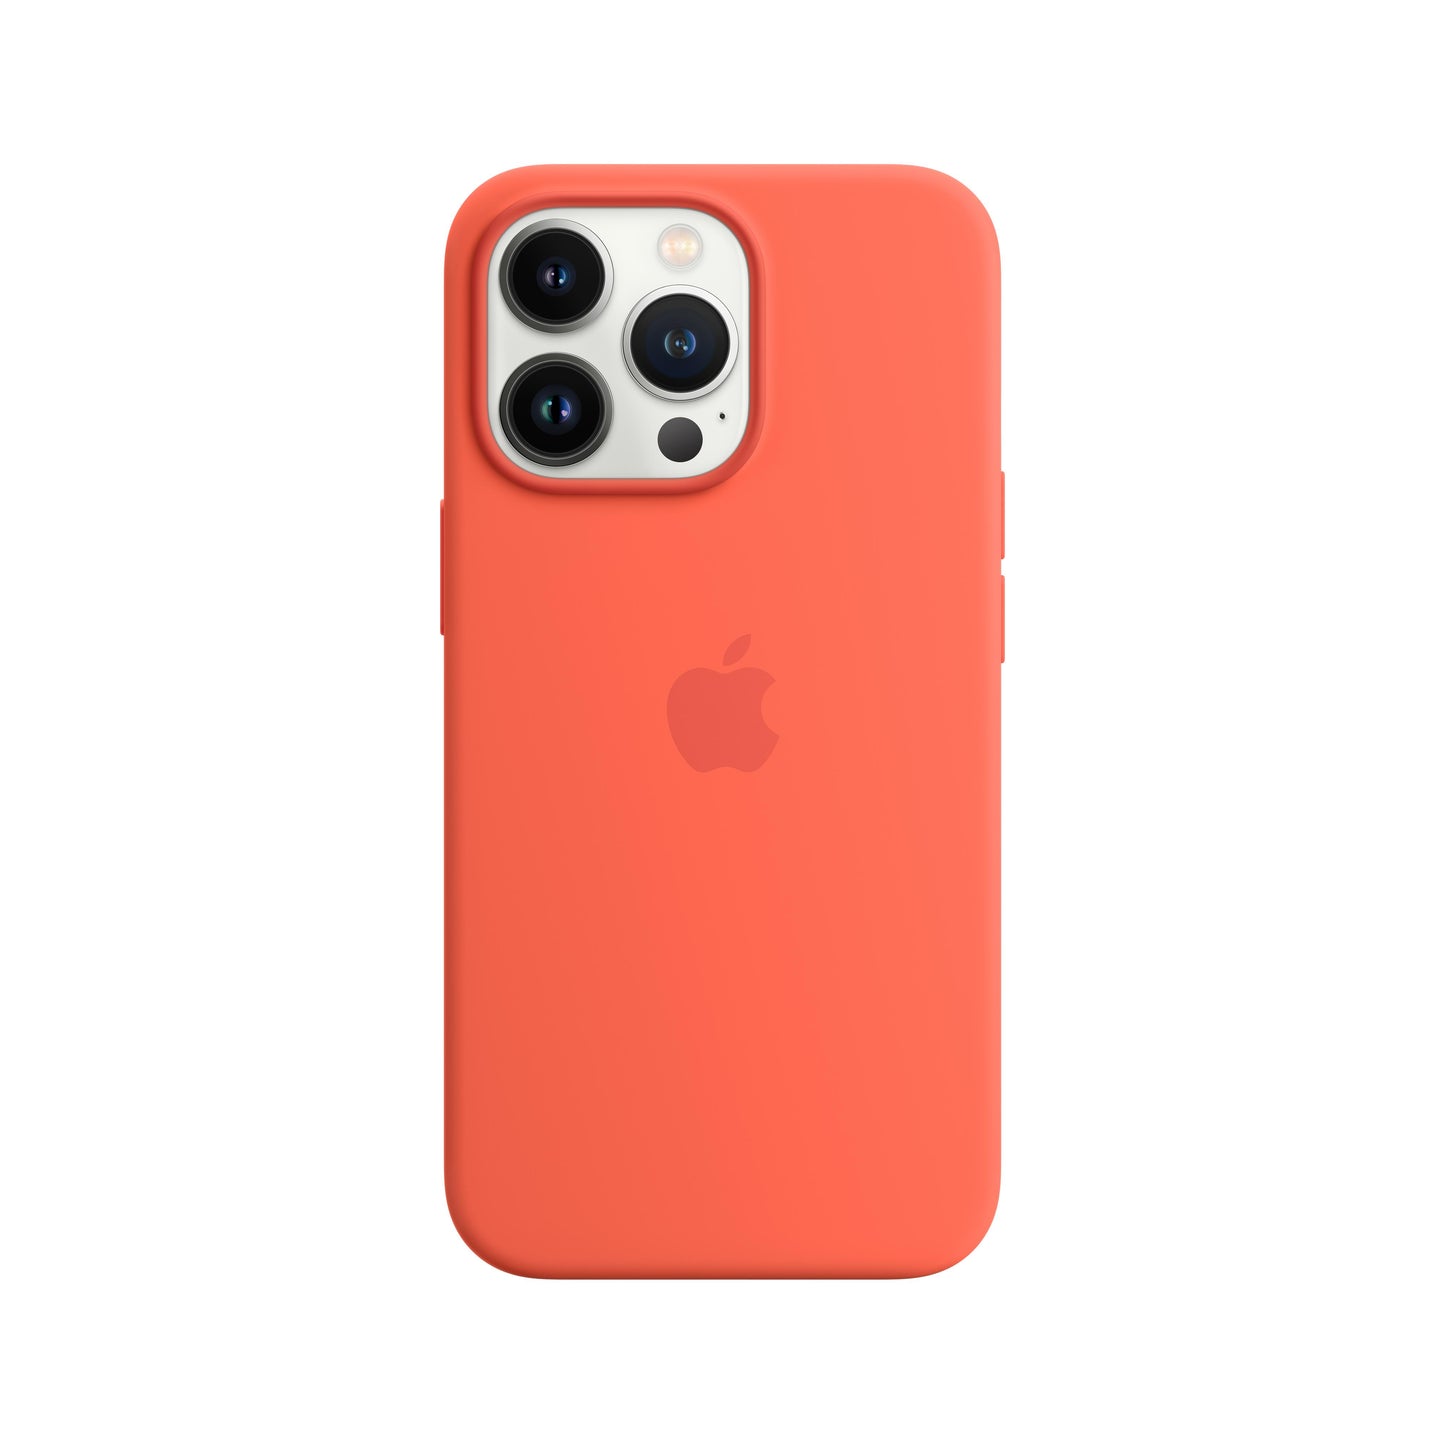 iPhone 13 Pro Silicone Case with MagSafe - Nectarine